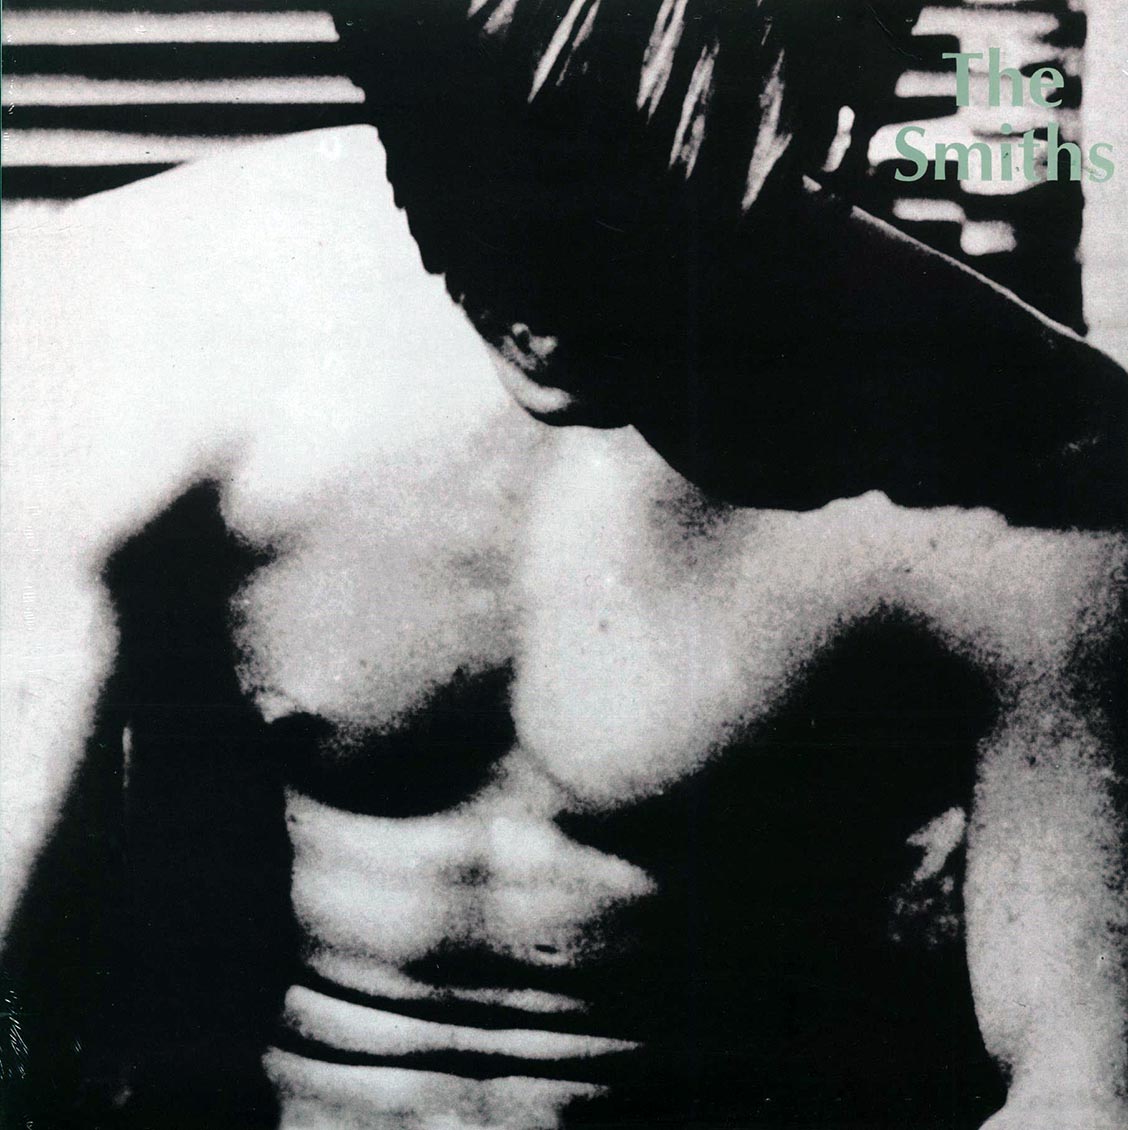 The Smiths - The Smiths (180g) - Vinyl LP